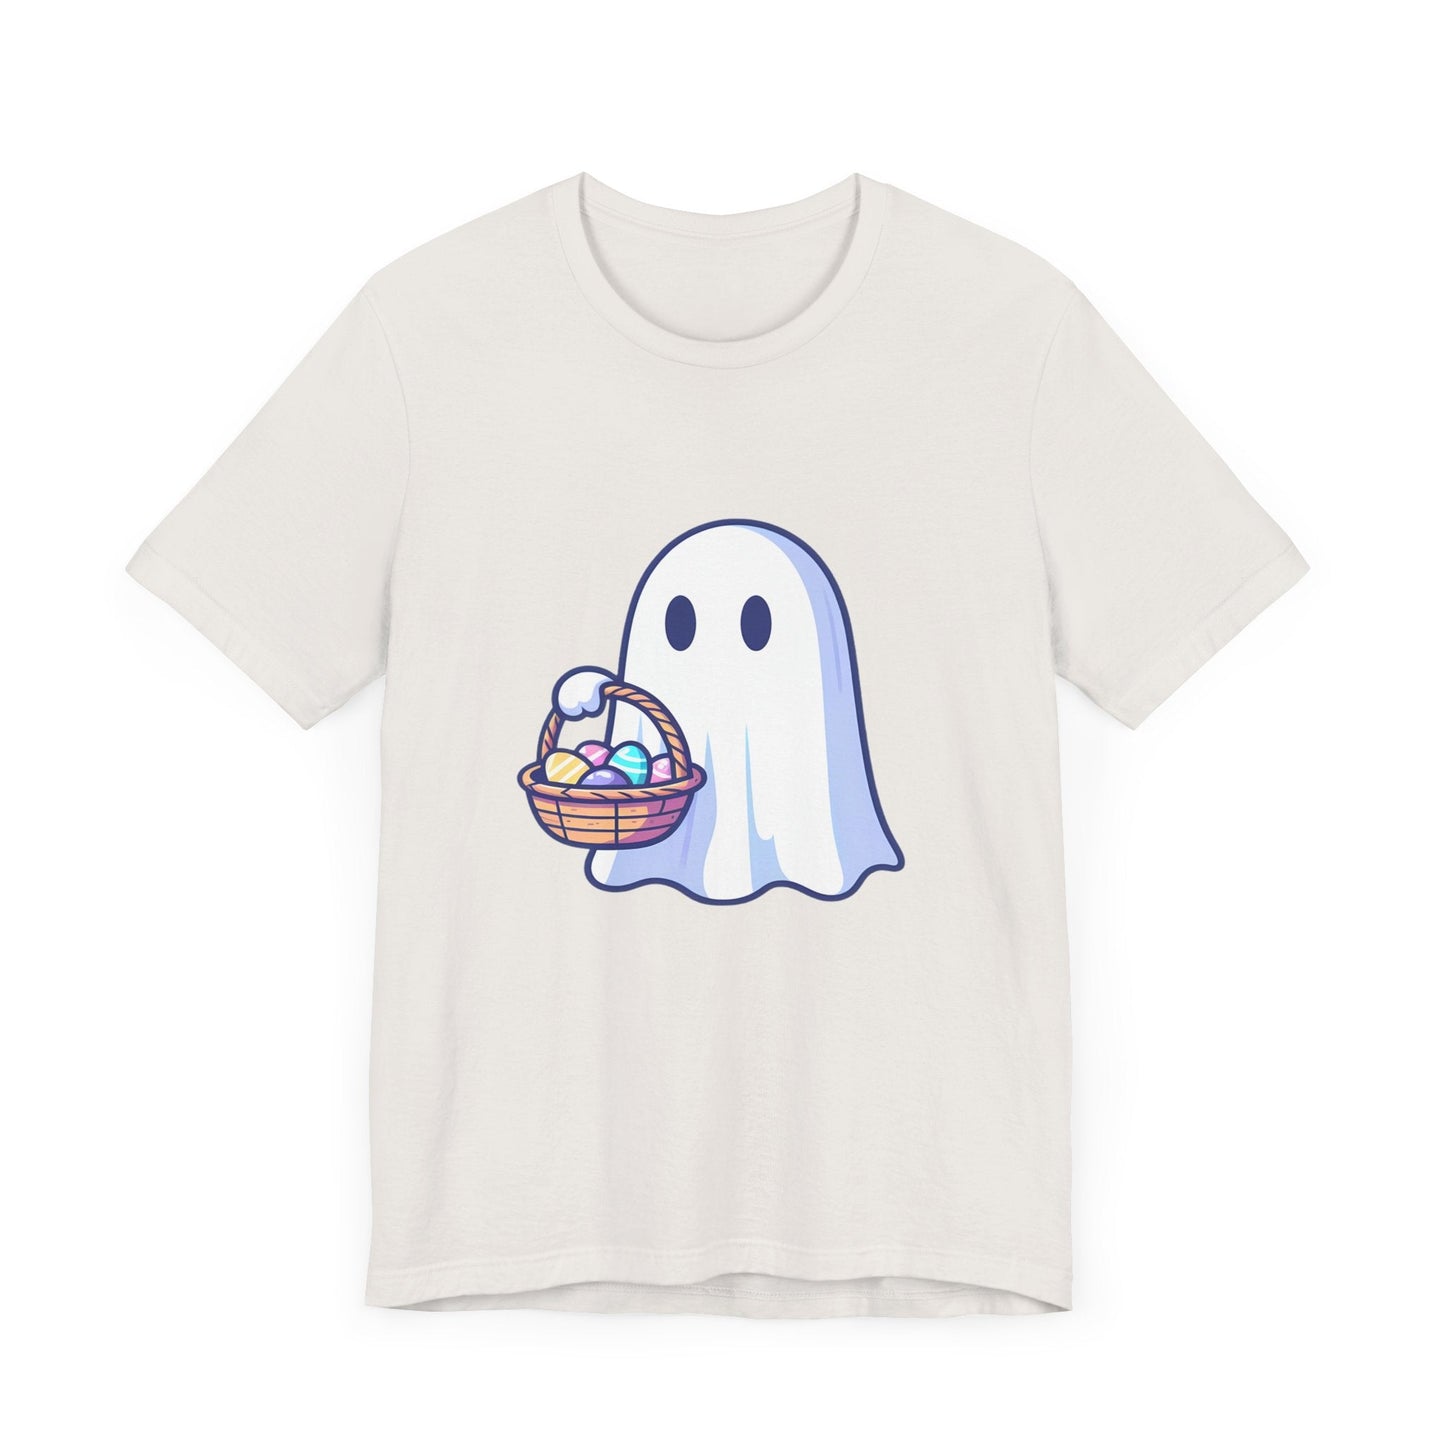 Ghost With Easter Basket Short Sleeve Tee ShirtT - ShirtVTZdesignsVintage WhiteXSCottonCrew neckDTG